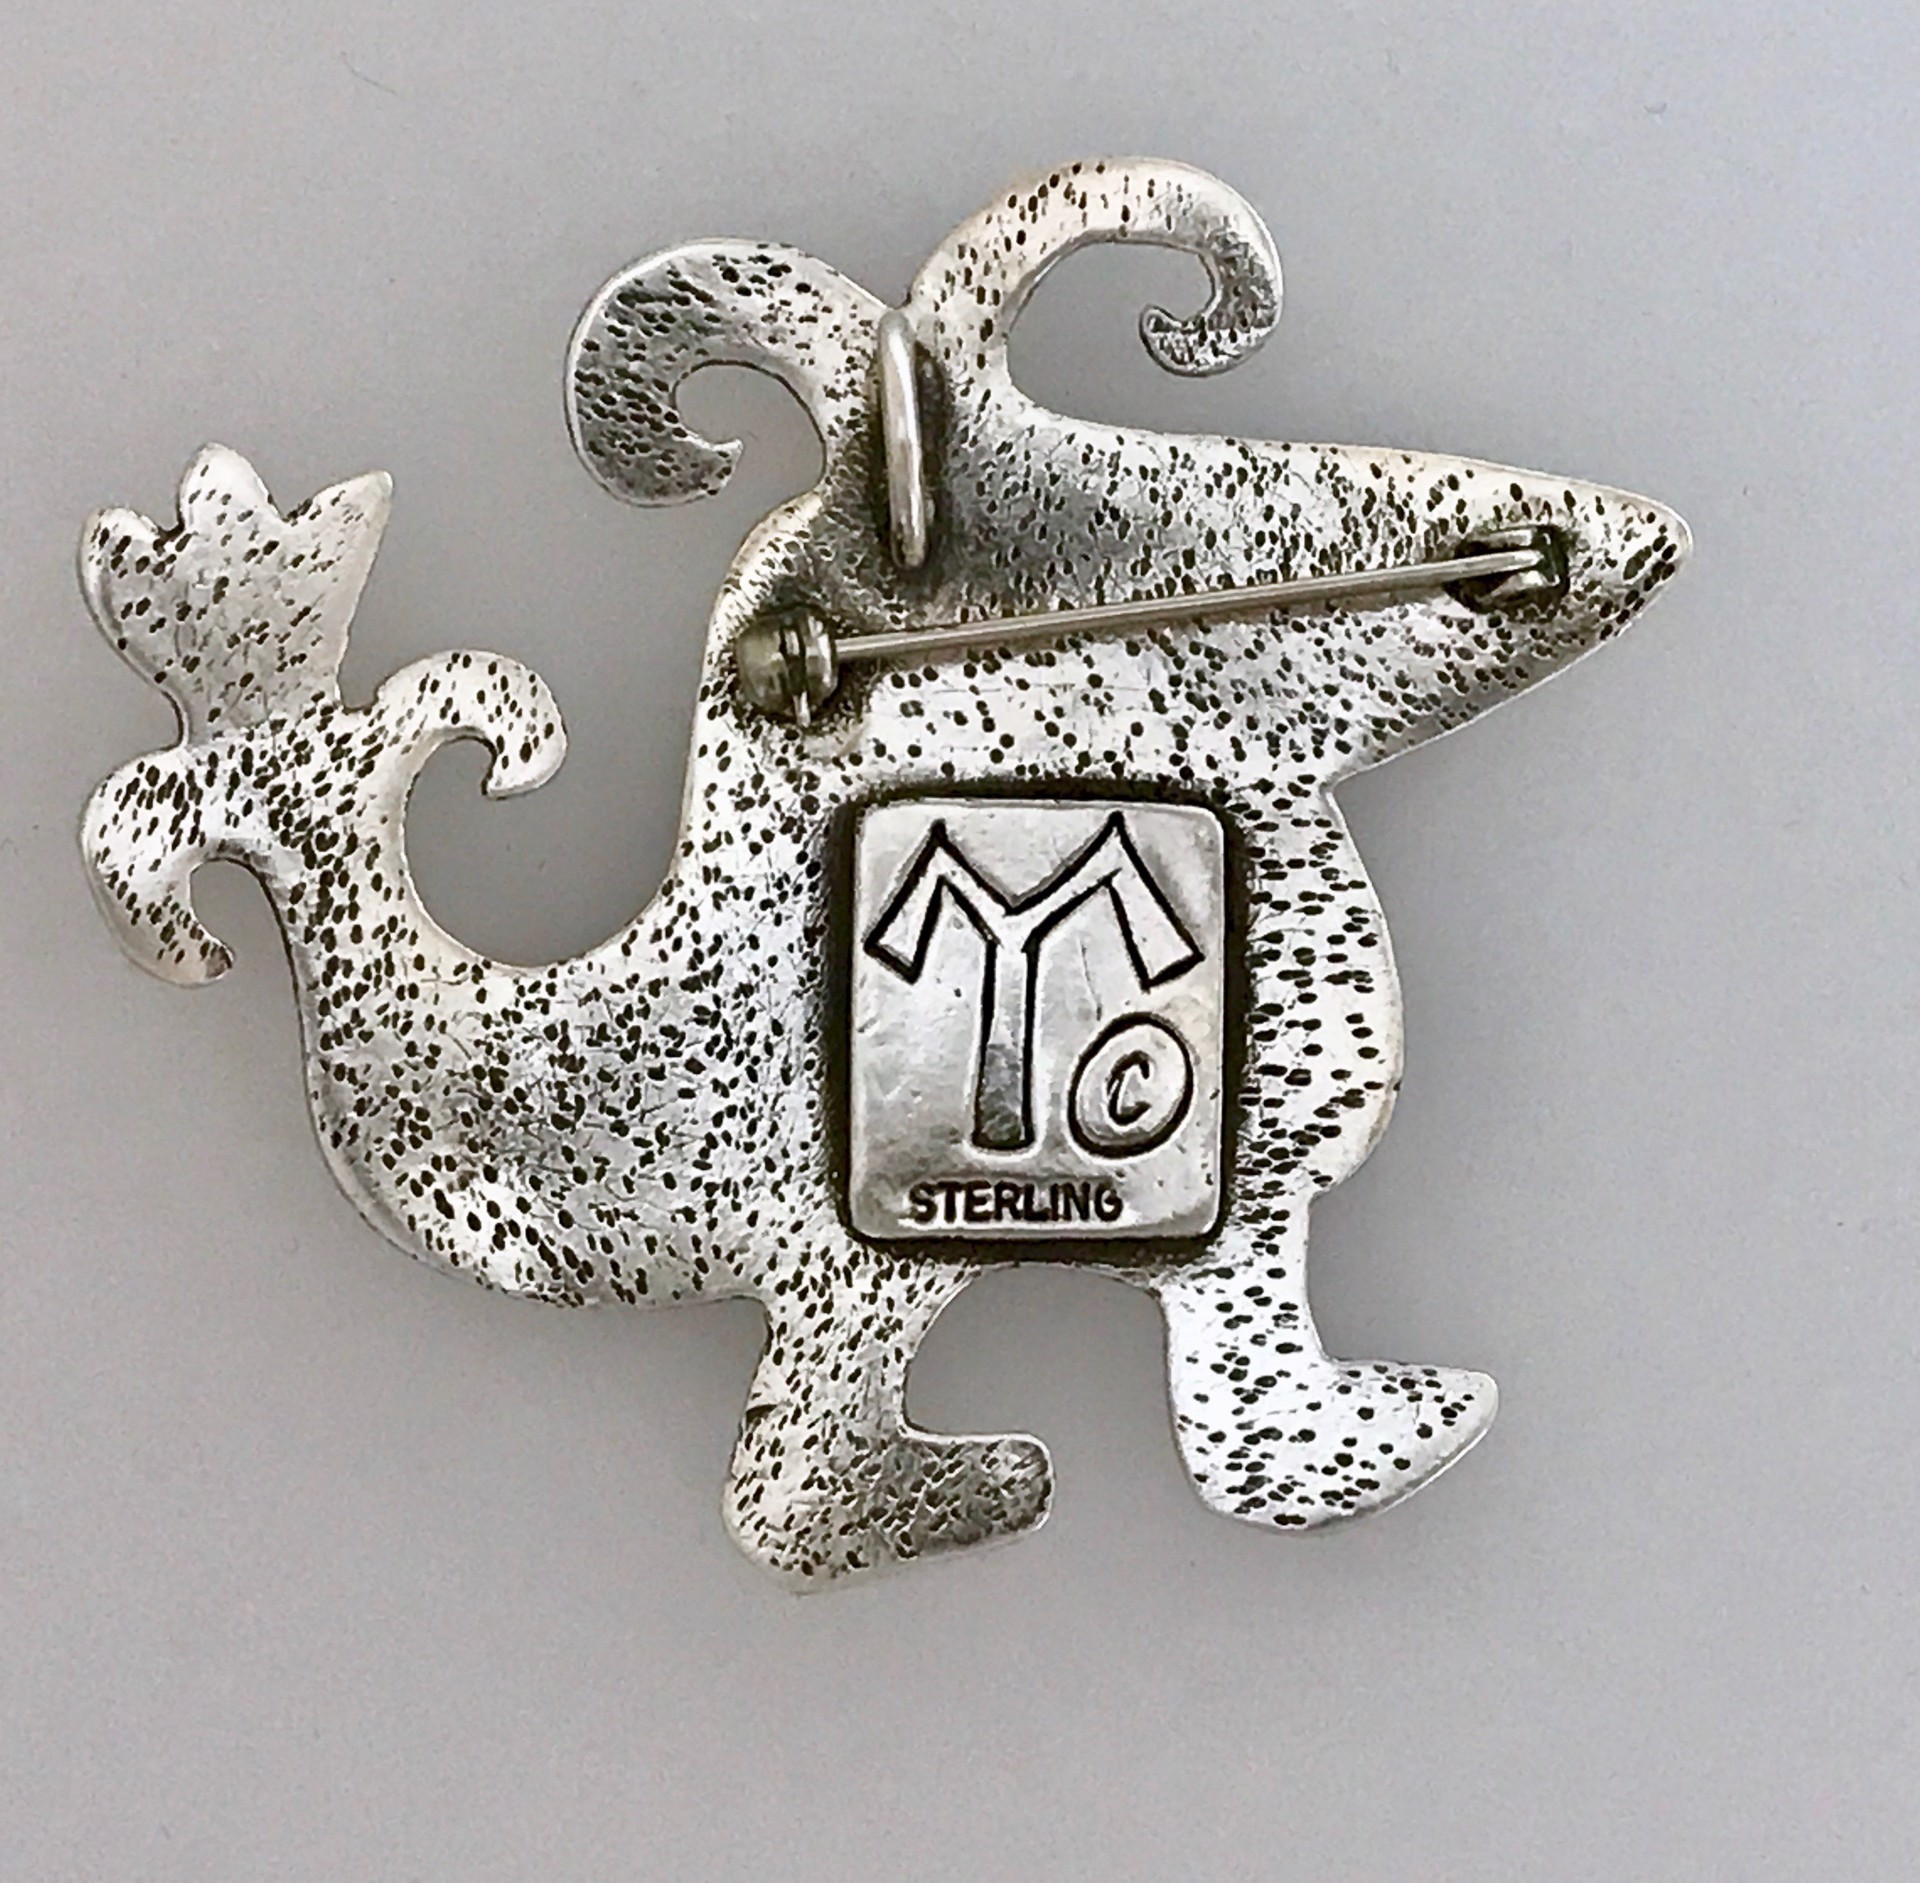 Little Jack pendant by Melanie A. Yazzie